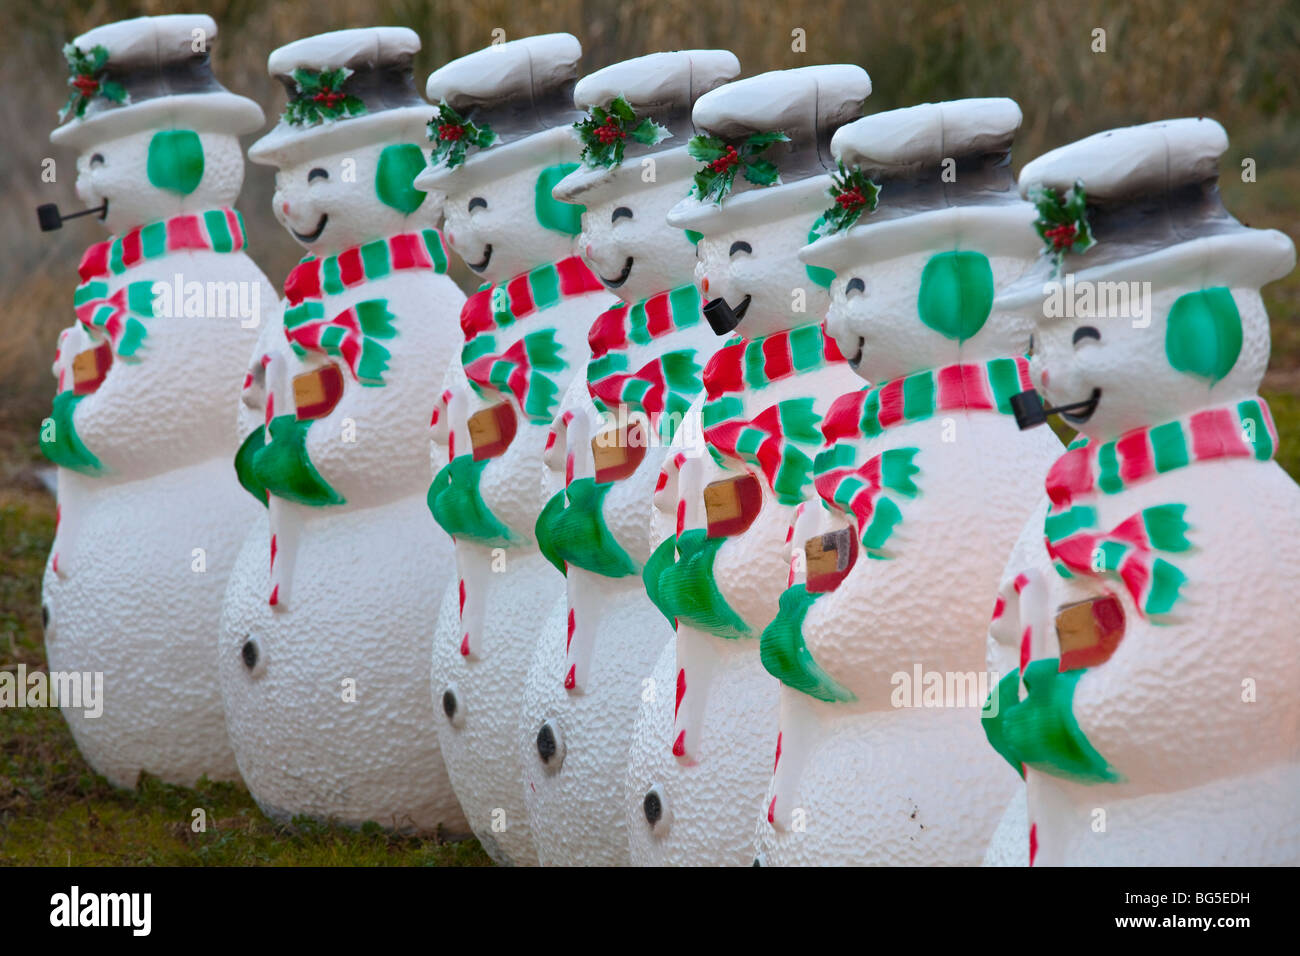 Snowmen on parade at CornerStone garden and sculpture center in